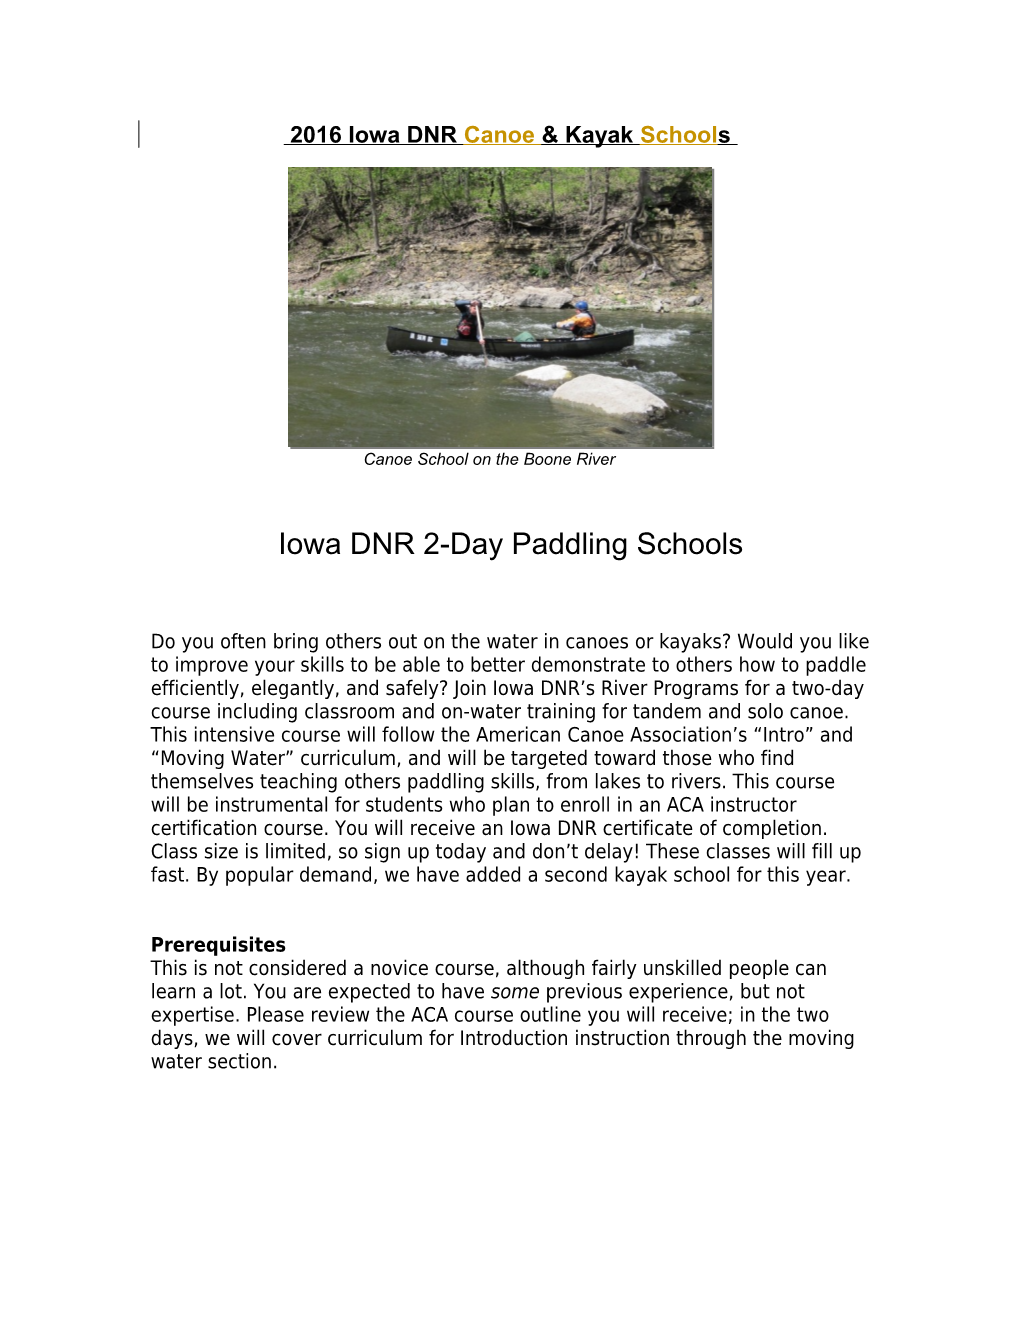 Iowa DNR 2-Day Canoe Schools